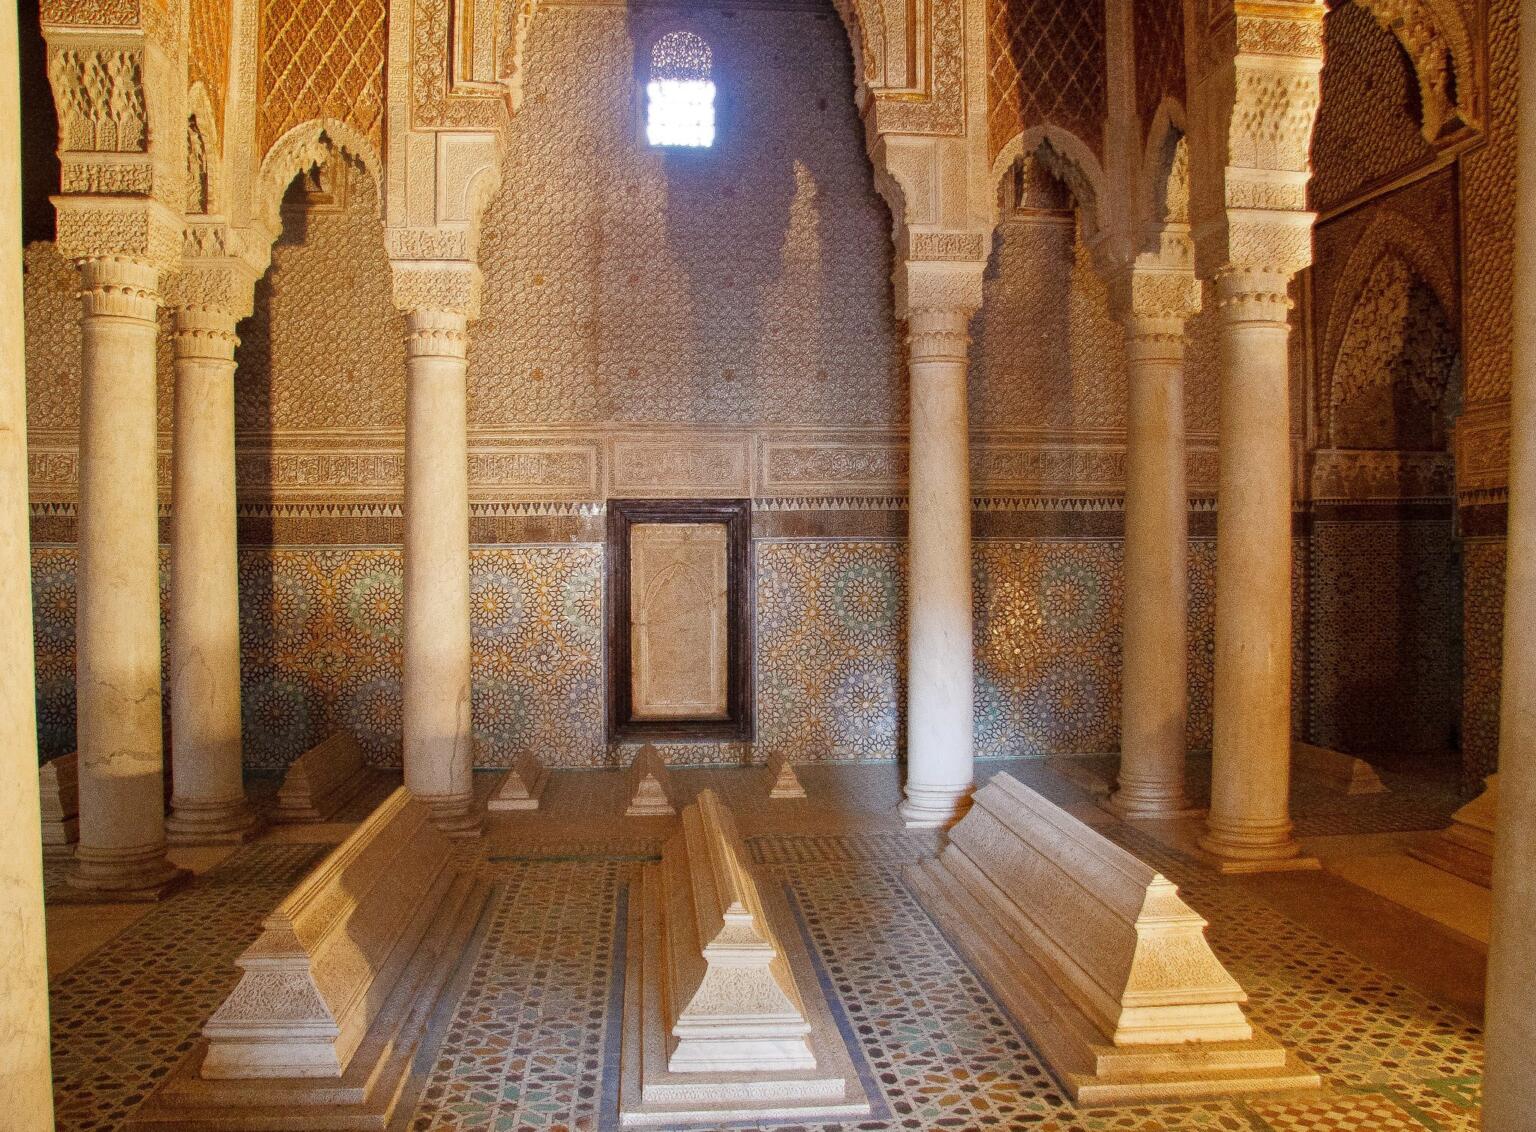 Saadian Tombs